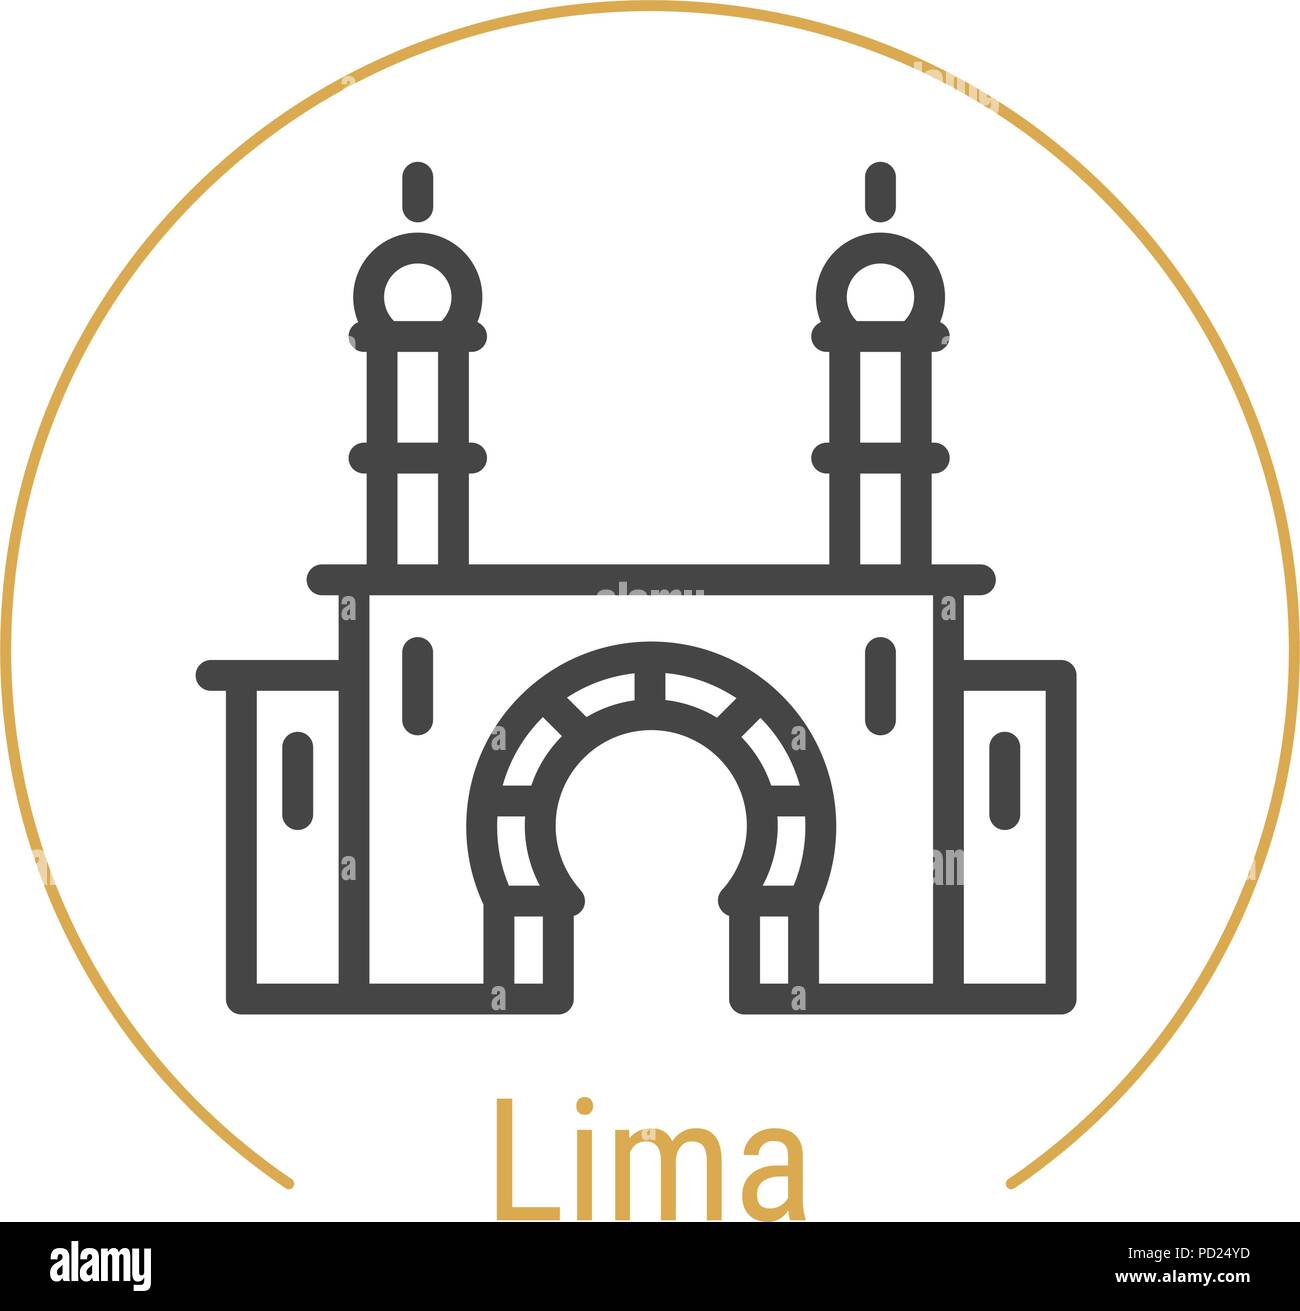 Lima, Peru Vector Line Icon Stock Vector